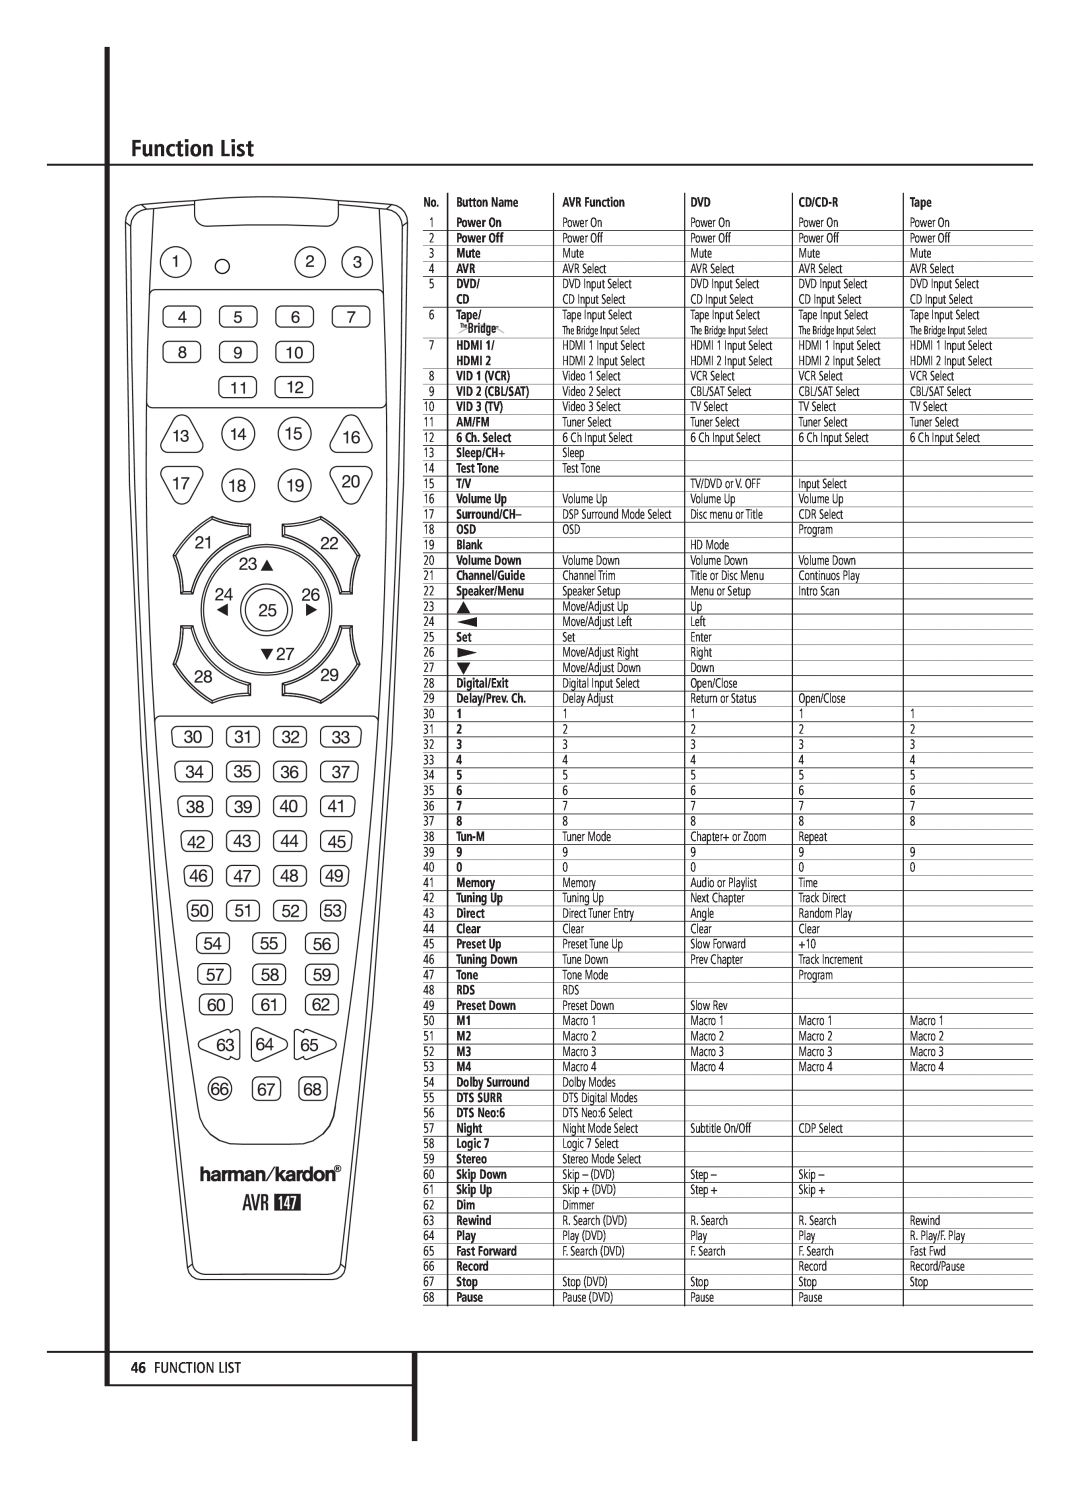 Harman-Kardon AVR 147 Function List, Button Name, AVR Function, Cd/Cd-R, Tape, Power On, Power Off, Mute, Hdmi, VID 1 VCR 